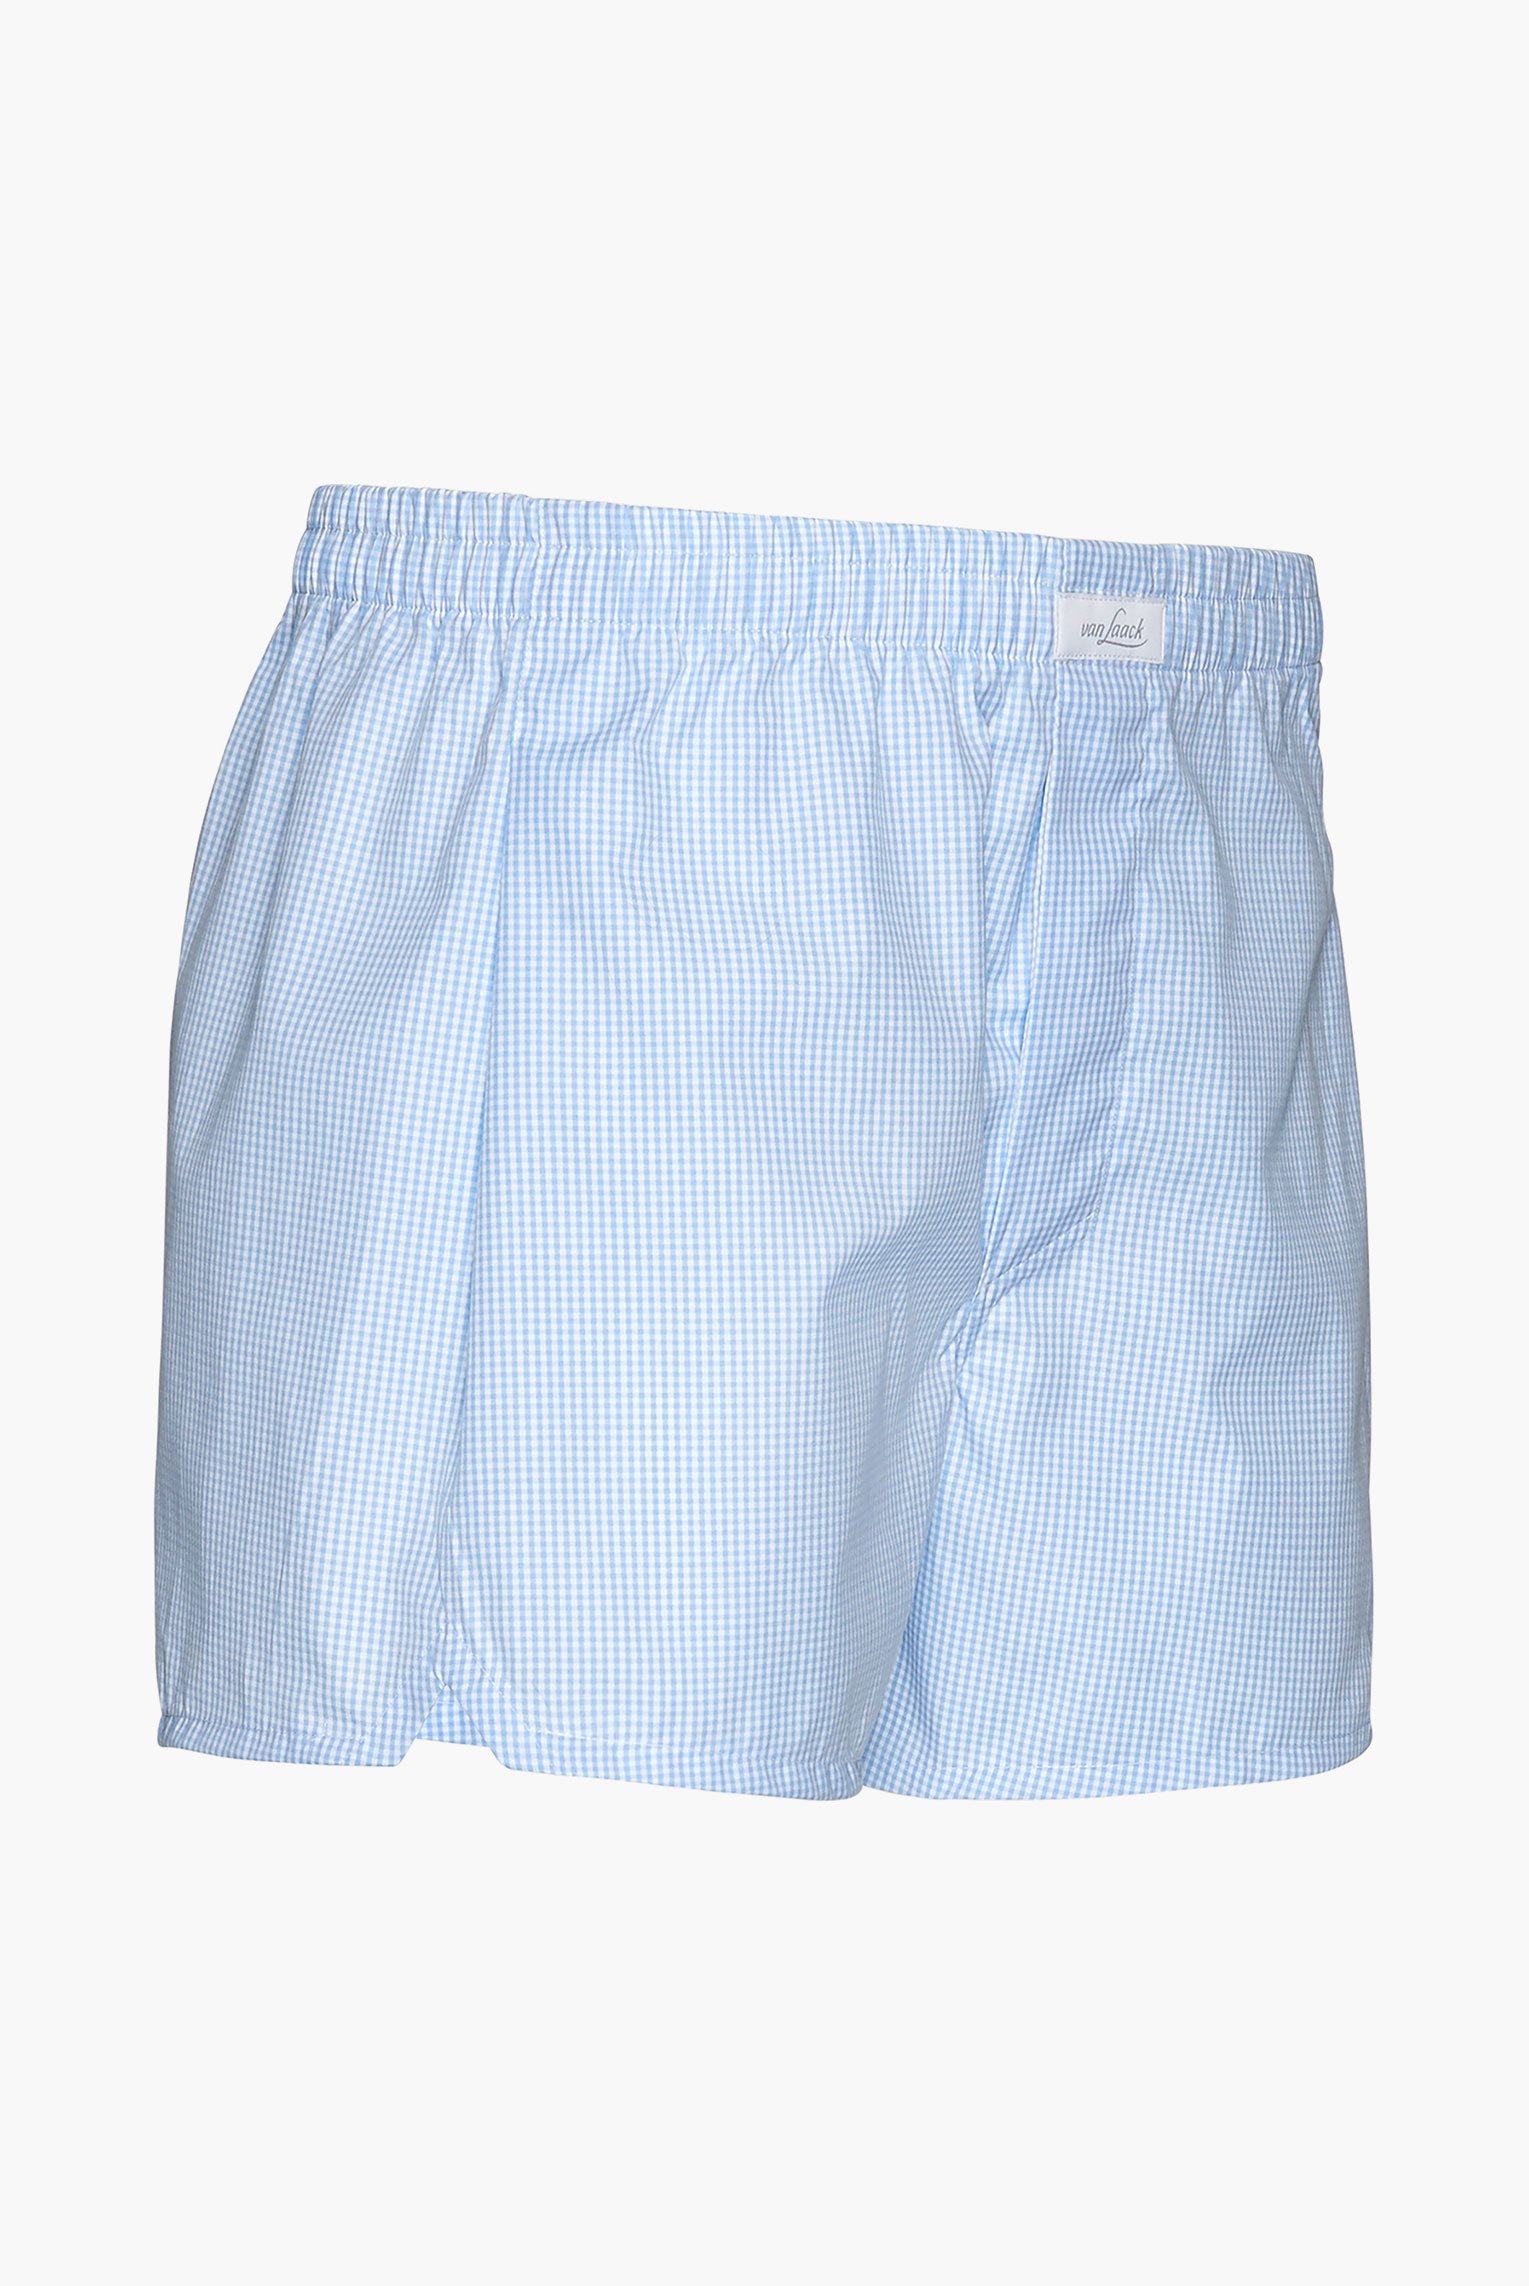 Underwear+Small Gingham Checked Poplin Boxer Shorts+91.1100.V4.141787.720.46